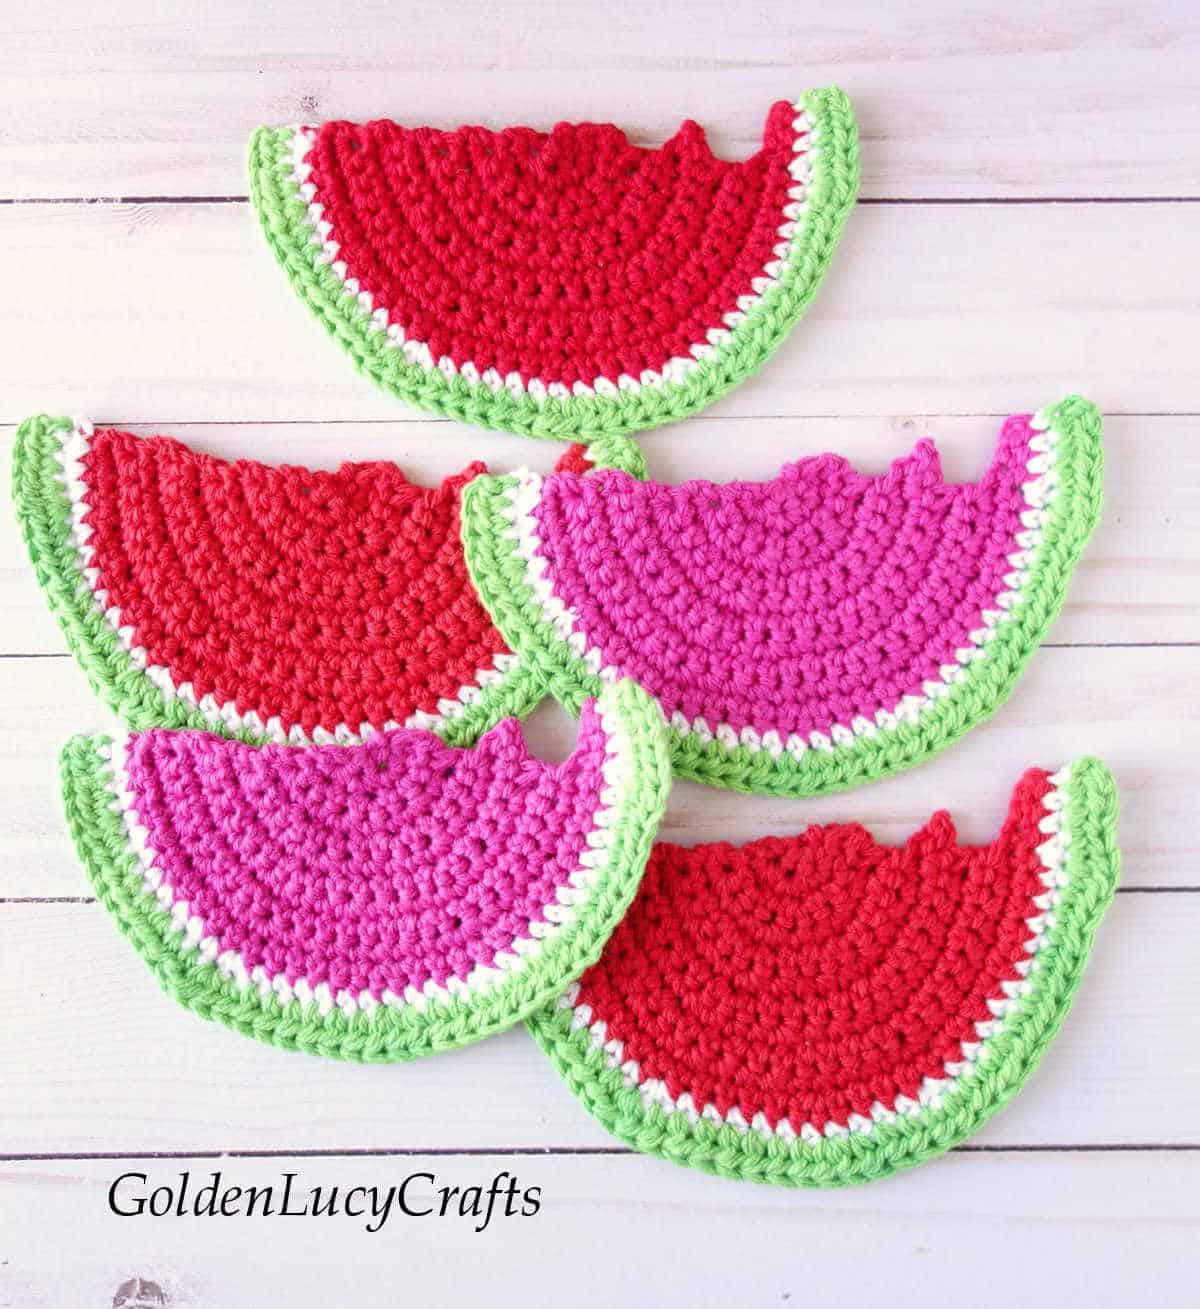 Five crochet watermelon coasters.